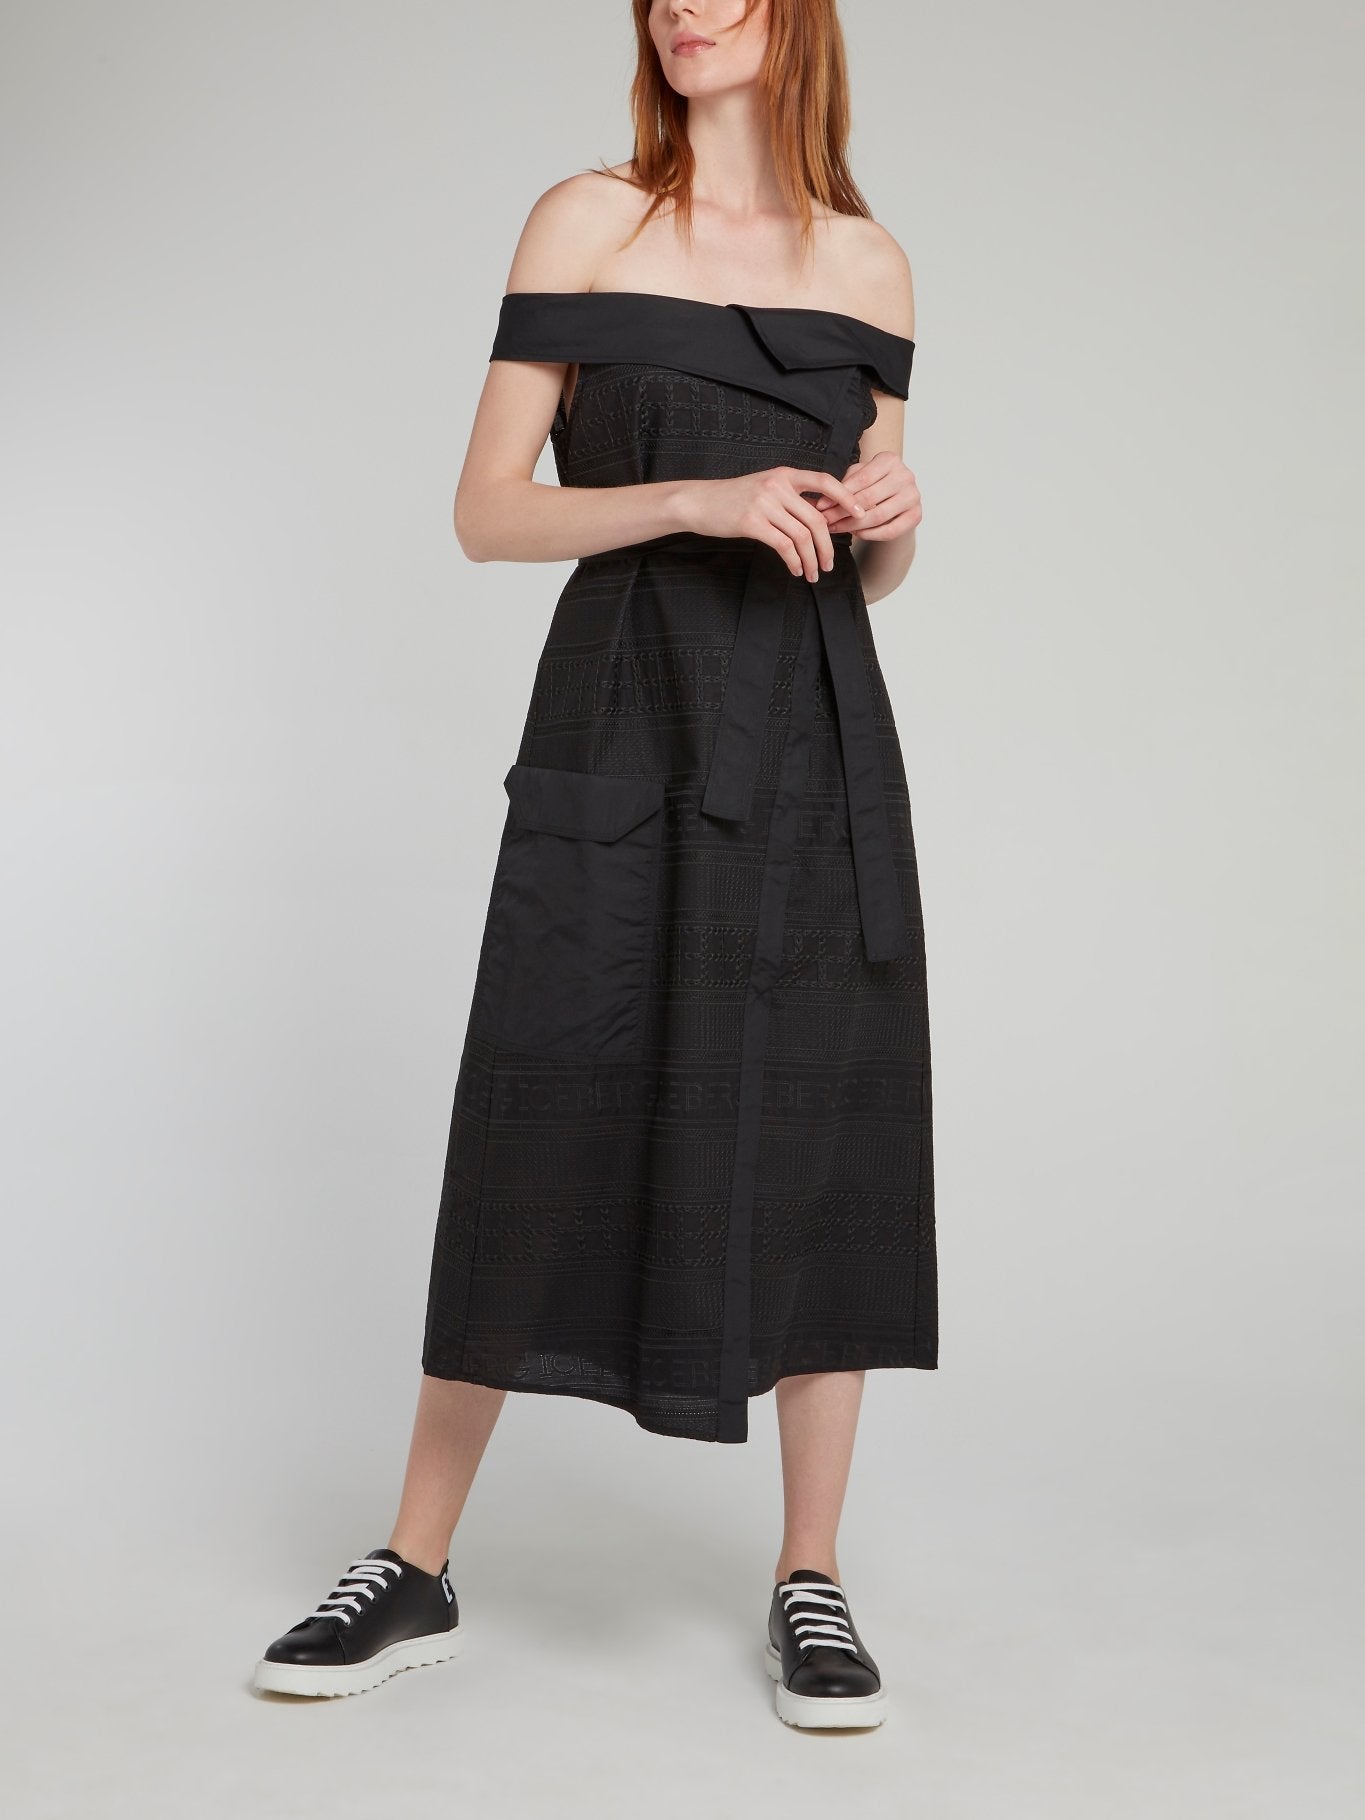 Black Off-The-Shoulder Tie Front Midi Dress